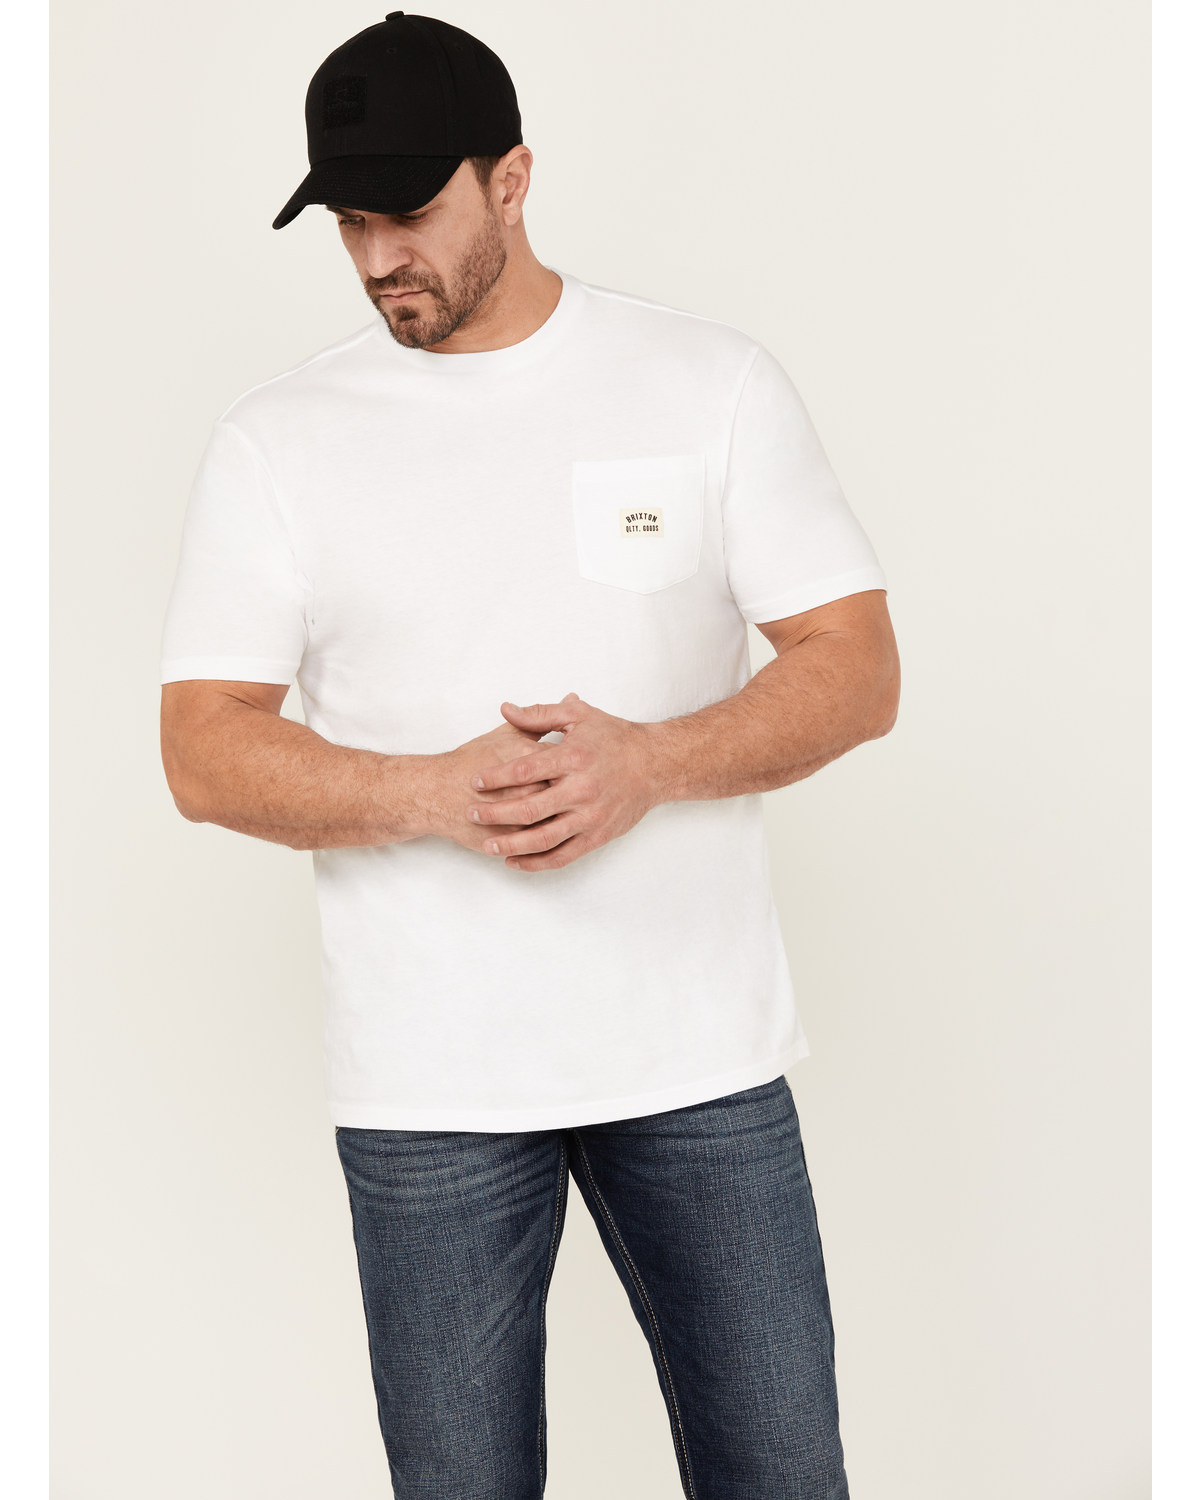 Brixton Men's Woodburn Short Sleeve Pocket T-Shirt